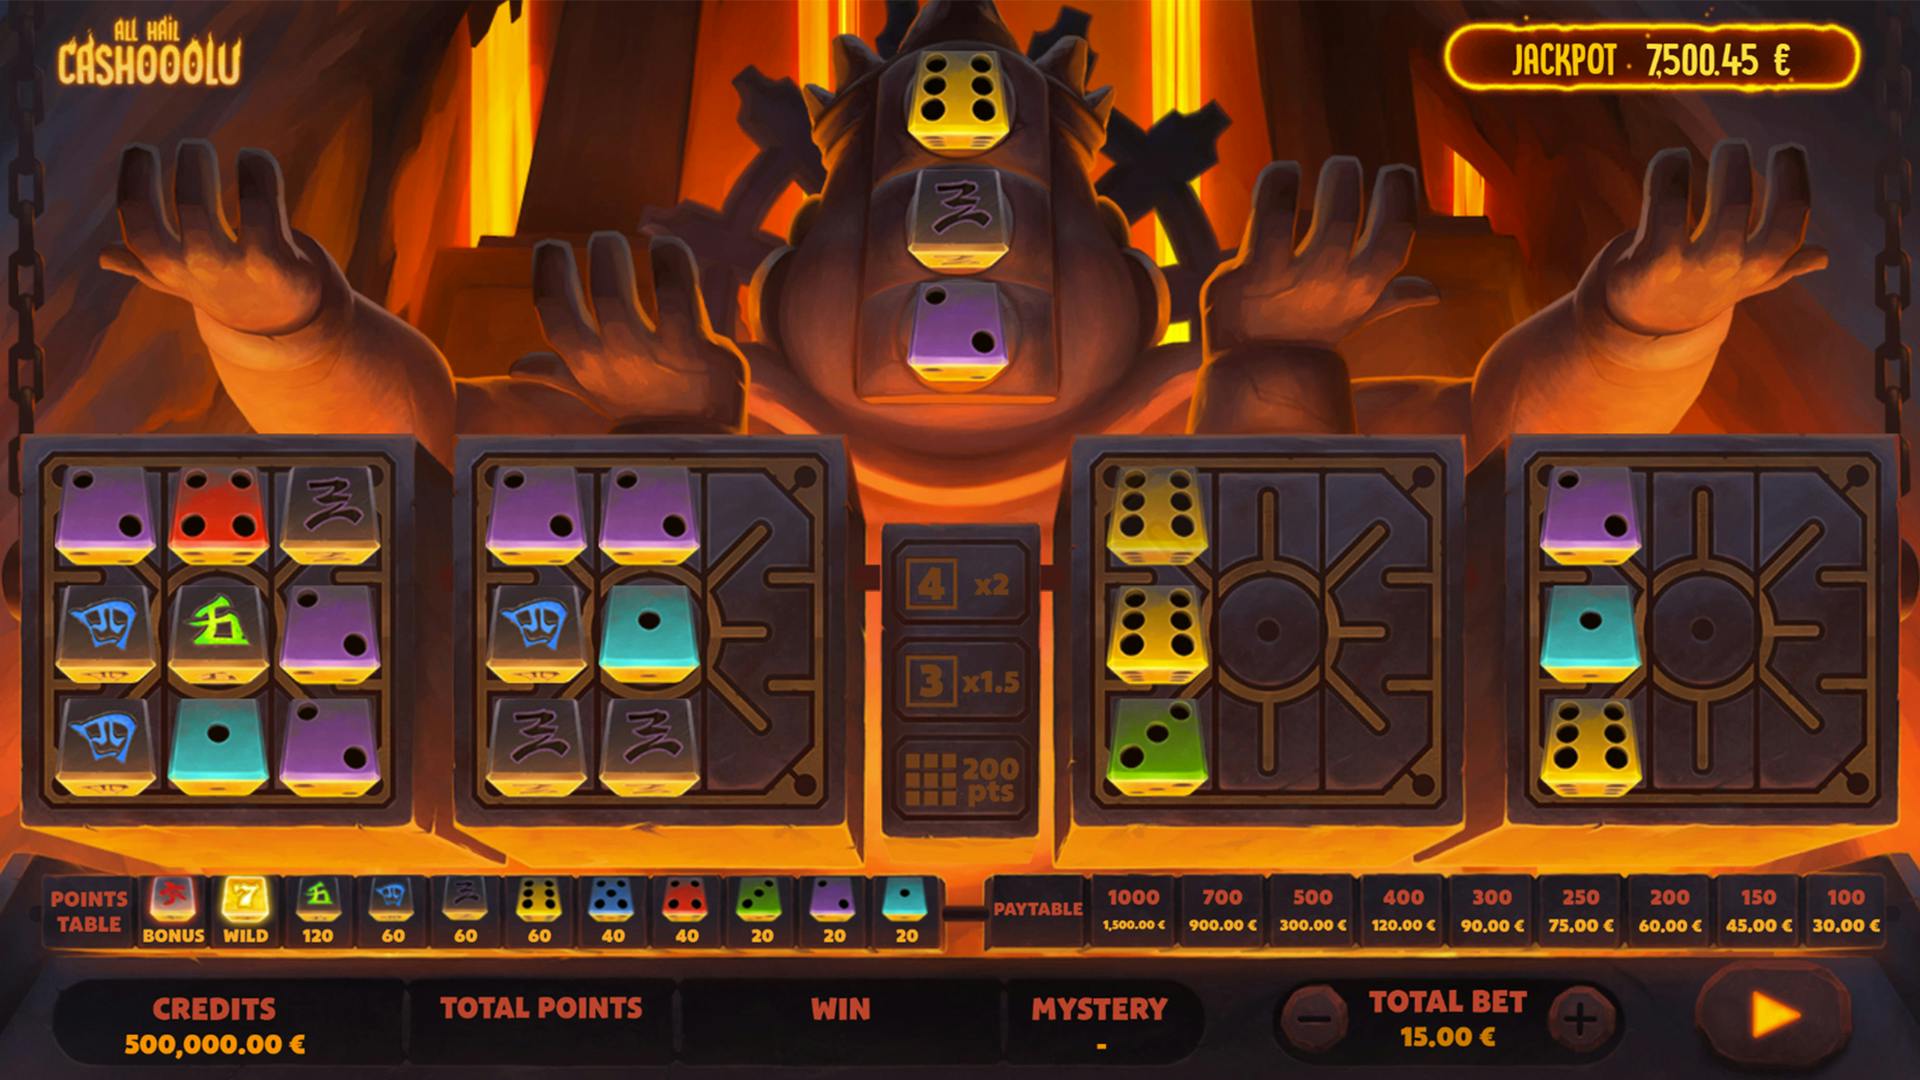 All Hail Cashooolu jeu de dice Gaming1 avec jackpot